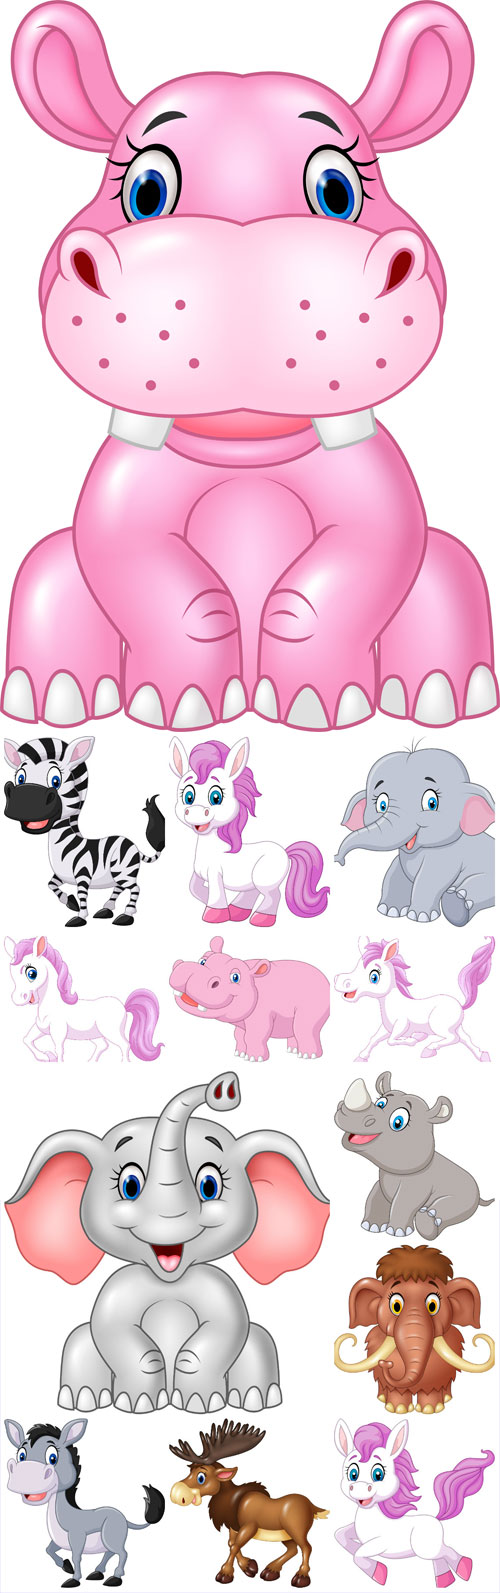 Cartoon animals vector, elephant, zebra, crocodile